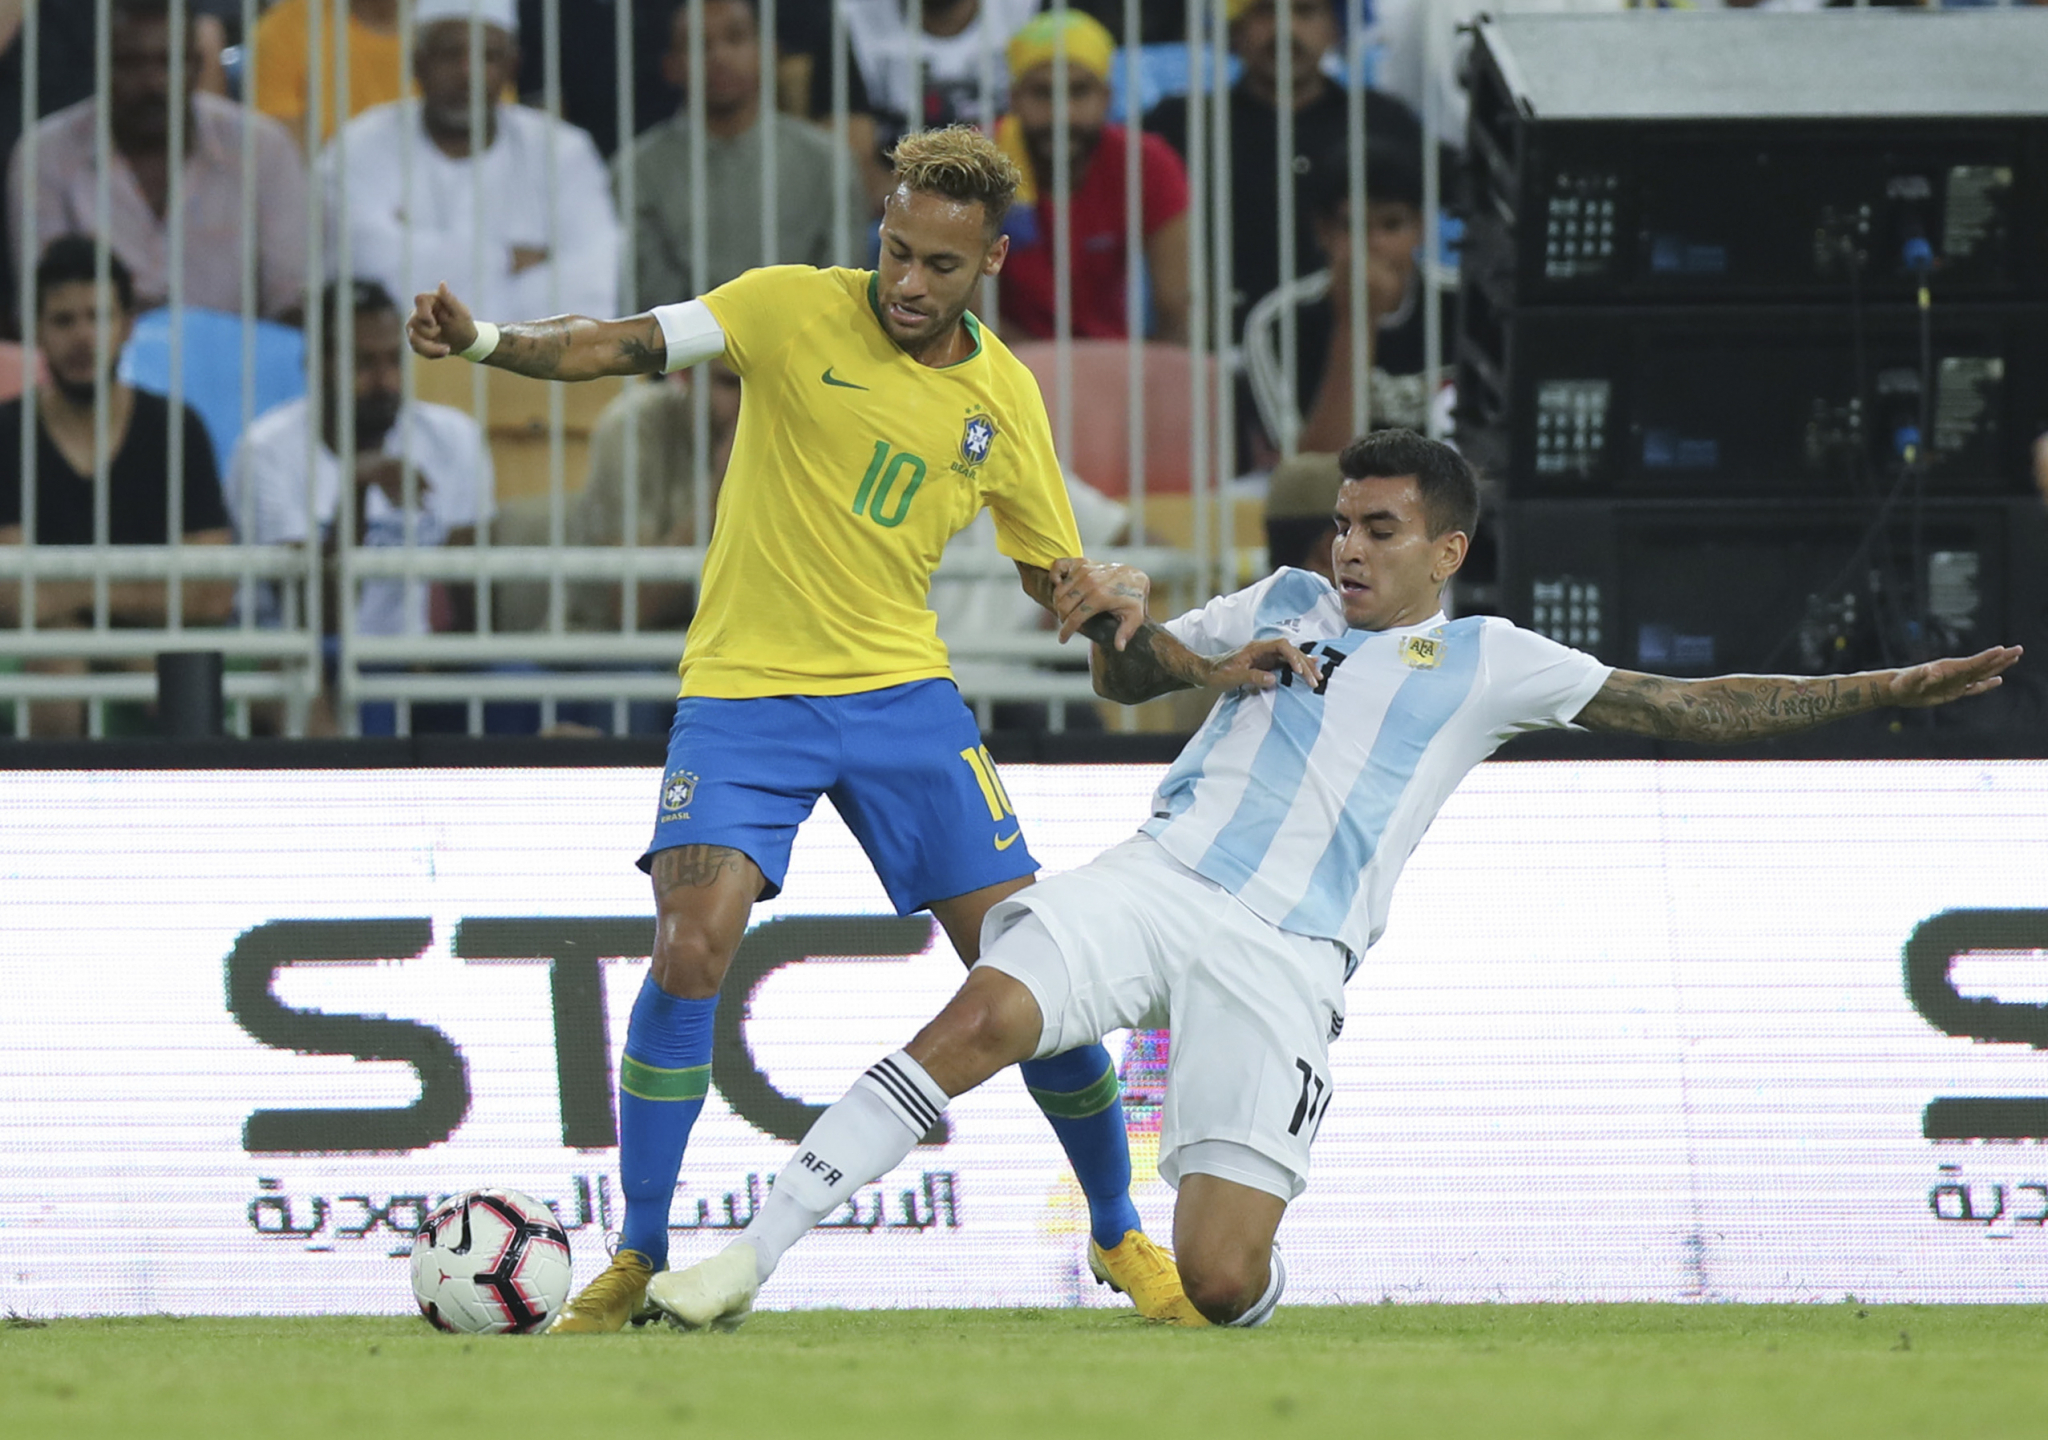 GOREĆE MARAKANA: Spektakularan derbi u finalu Kopa Amerike - Argentina ili Brazil?